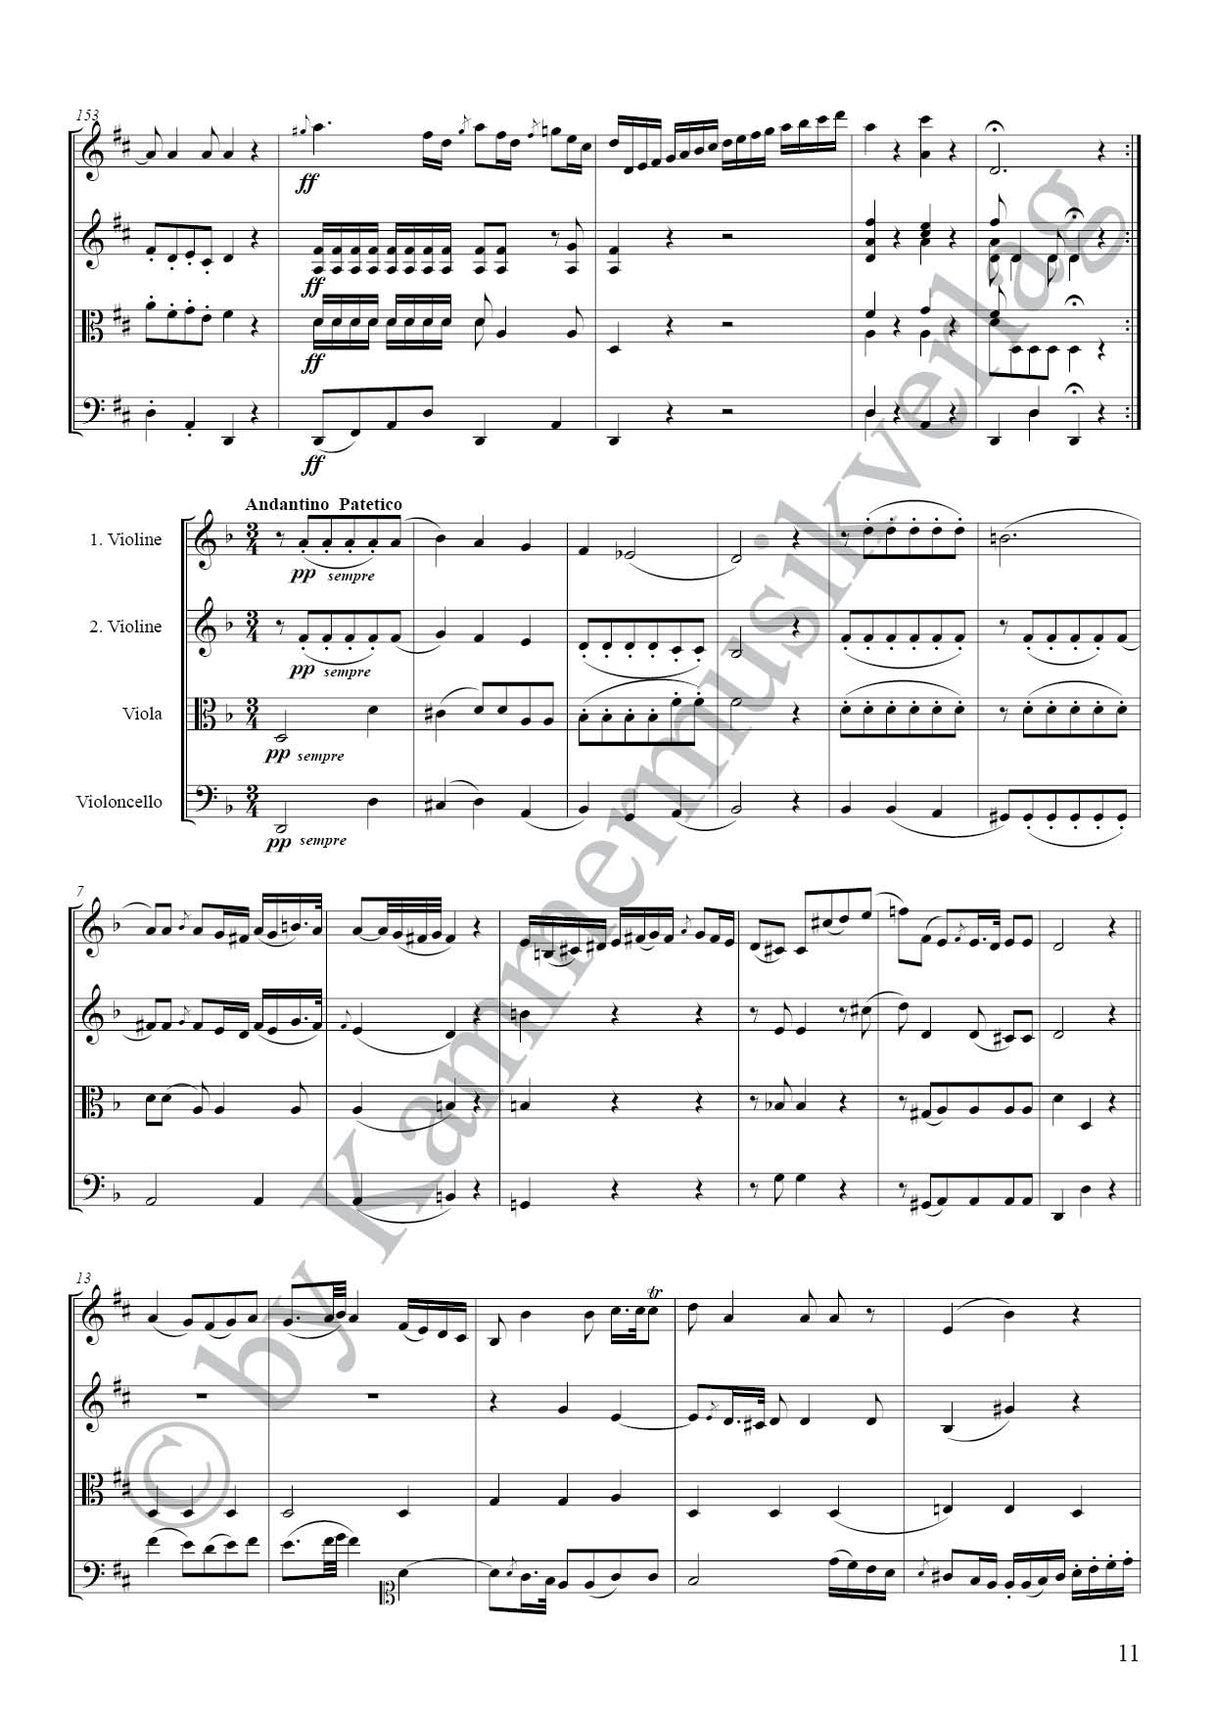 Boccherini: String Quartet in D Major, G 233, Op. 52, No. 2